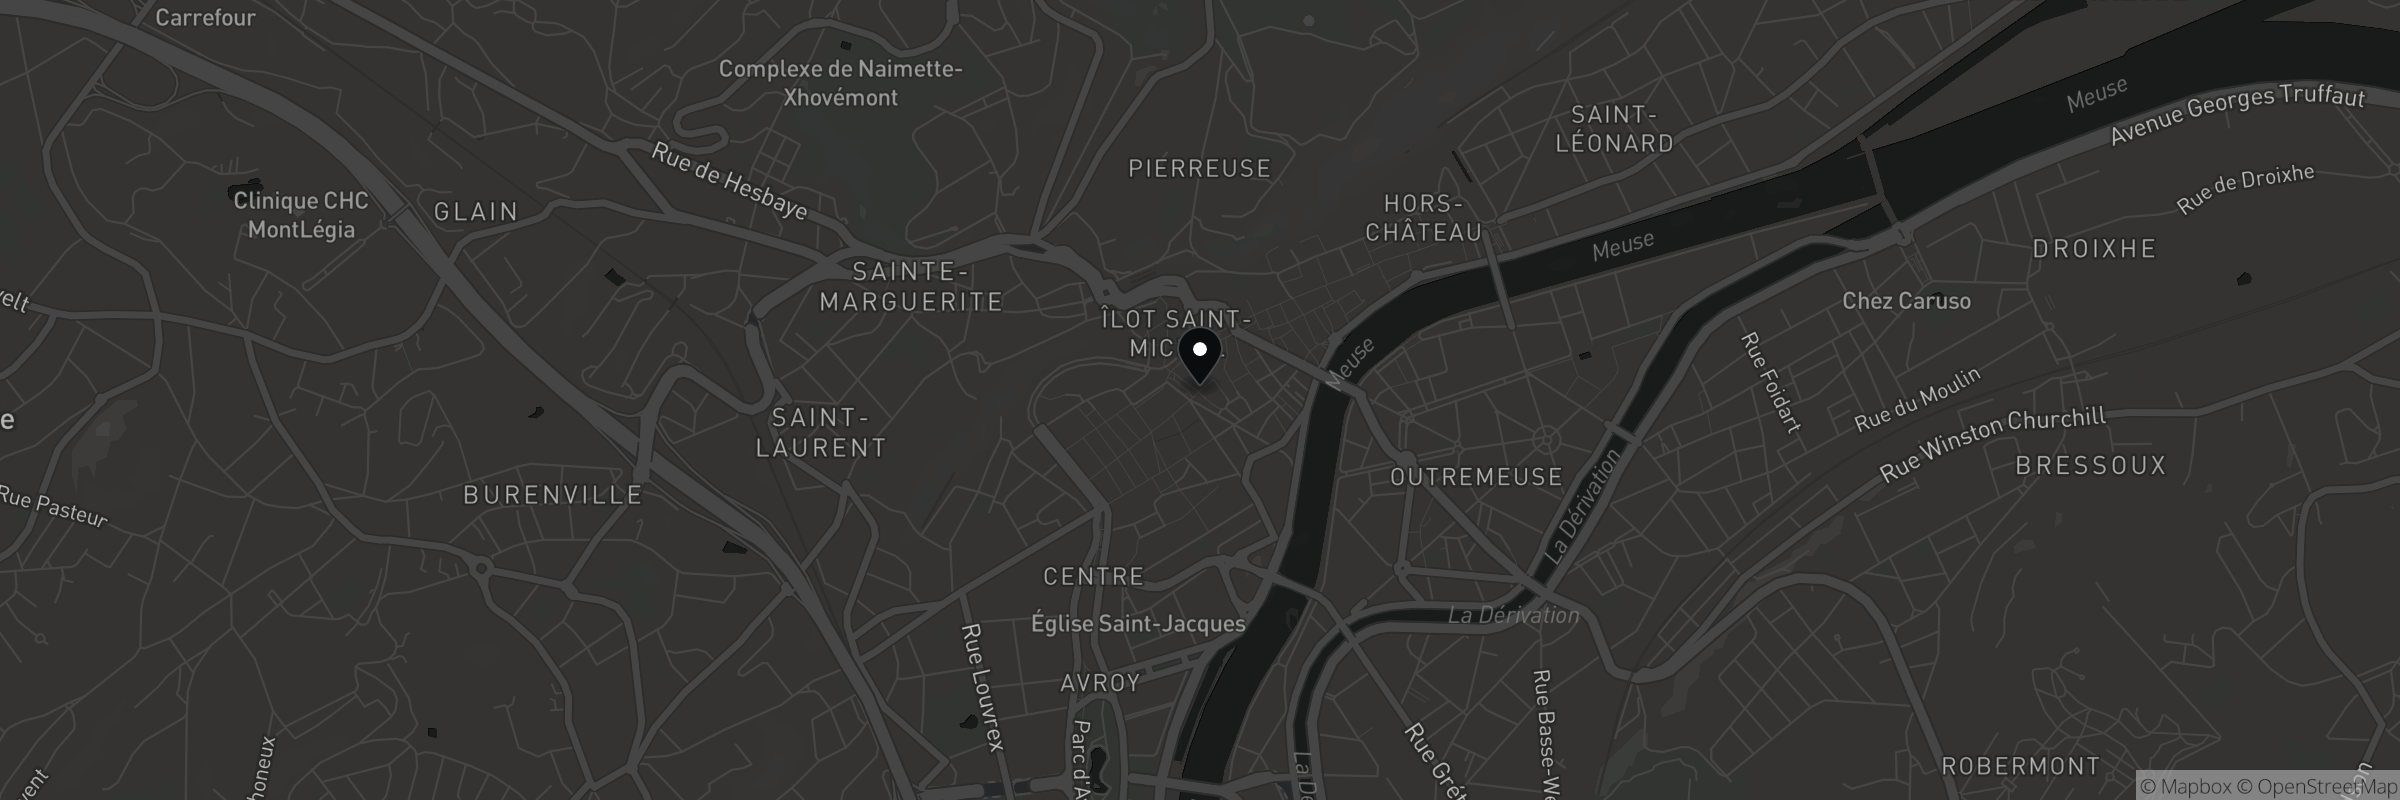 Kaart met het adres van Liège